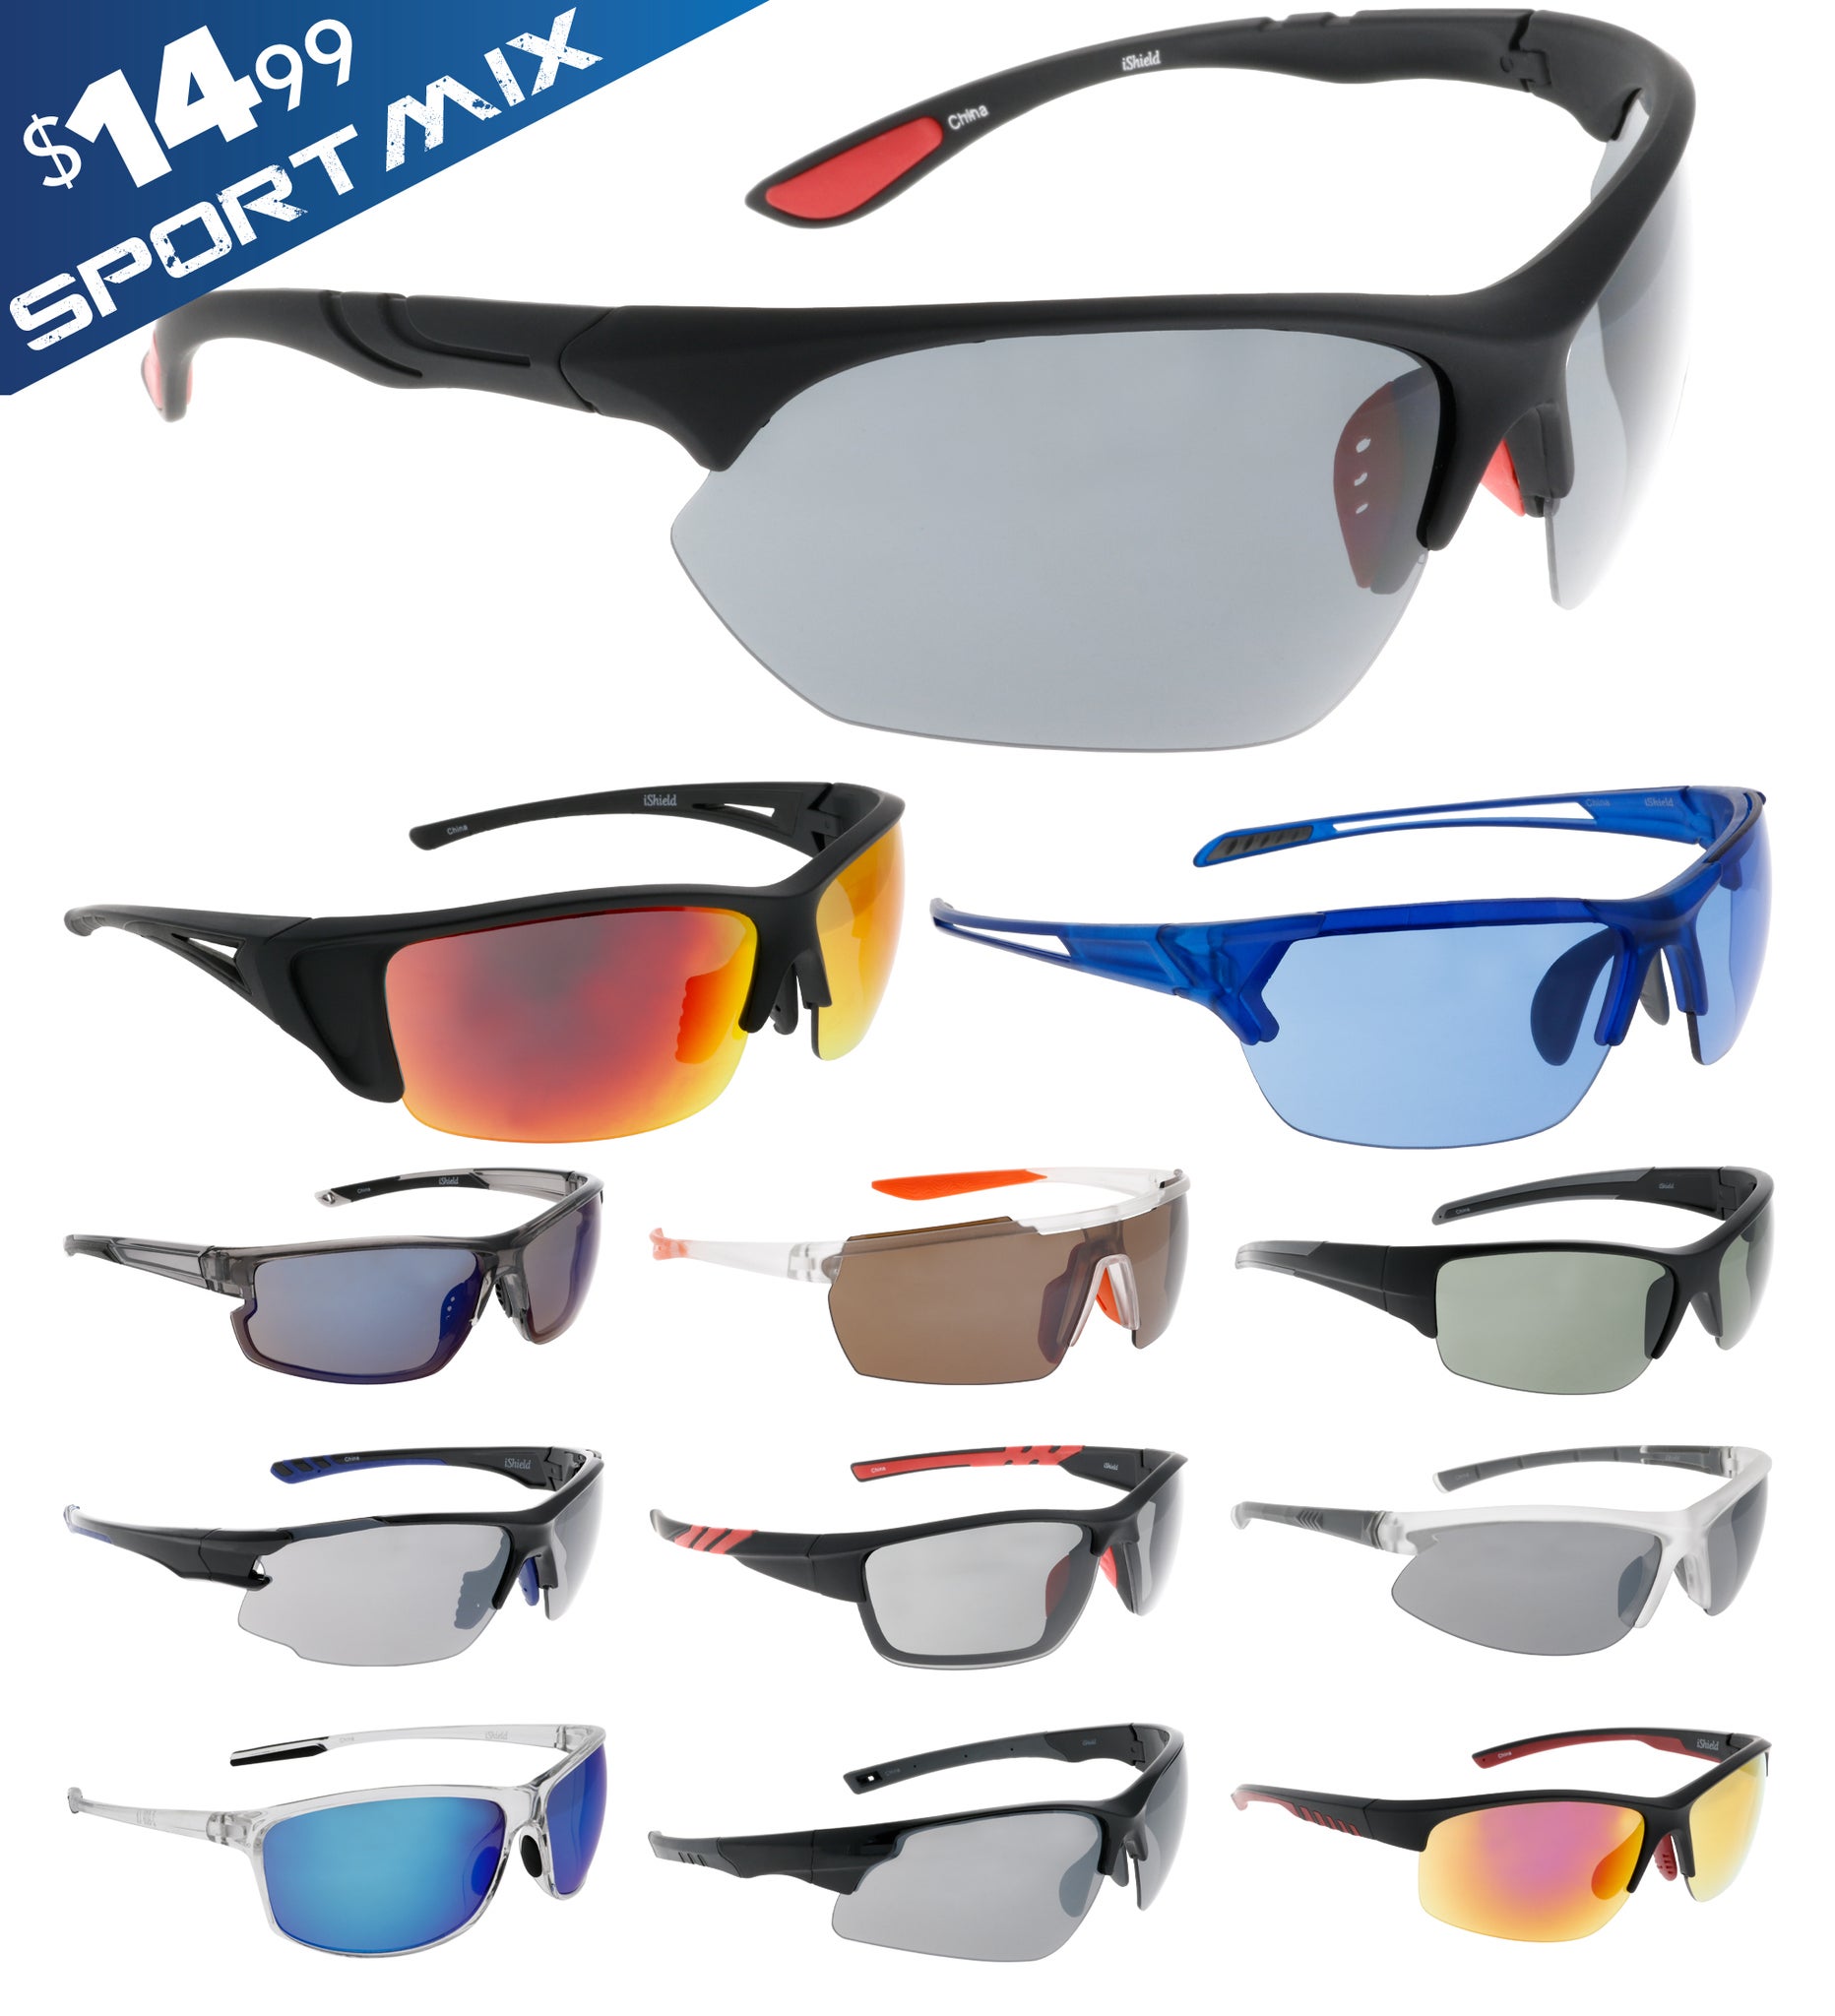 $14.99 Sport Sunglasses - UPC: 6-87110-02909 